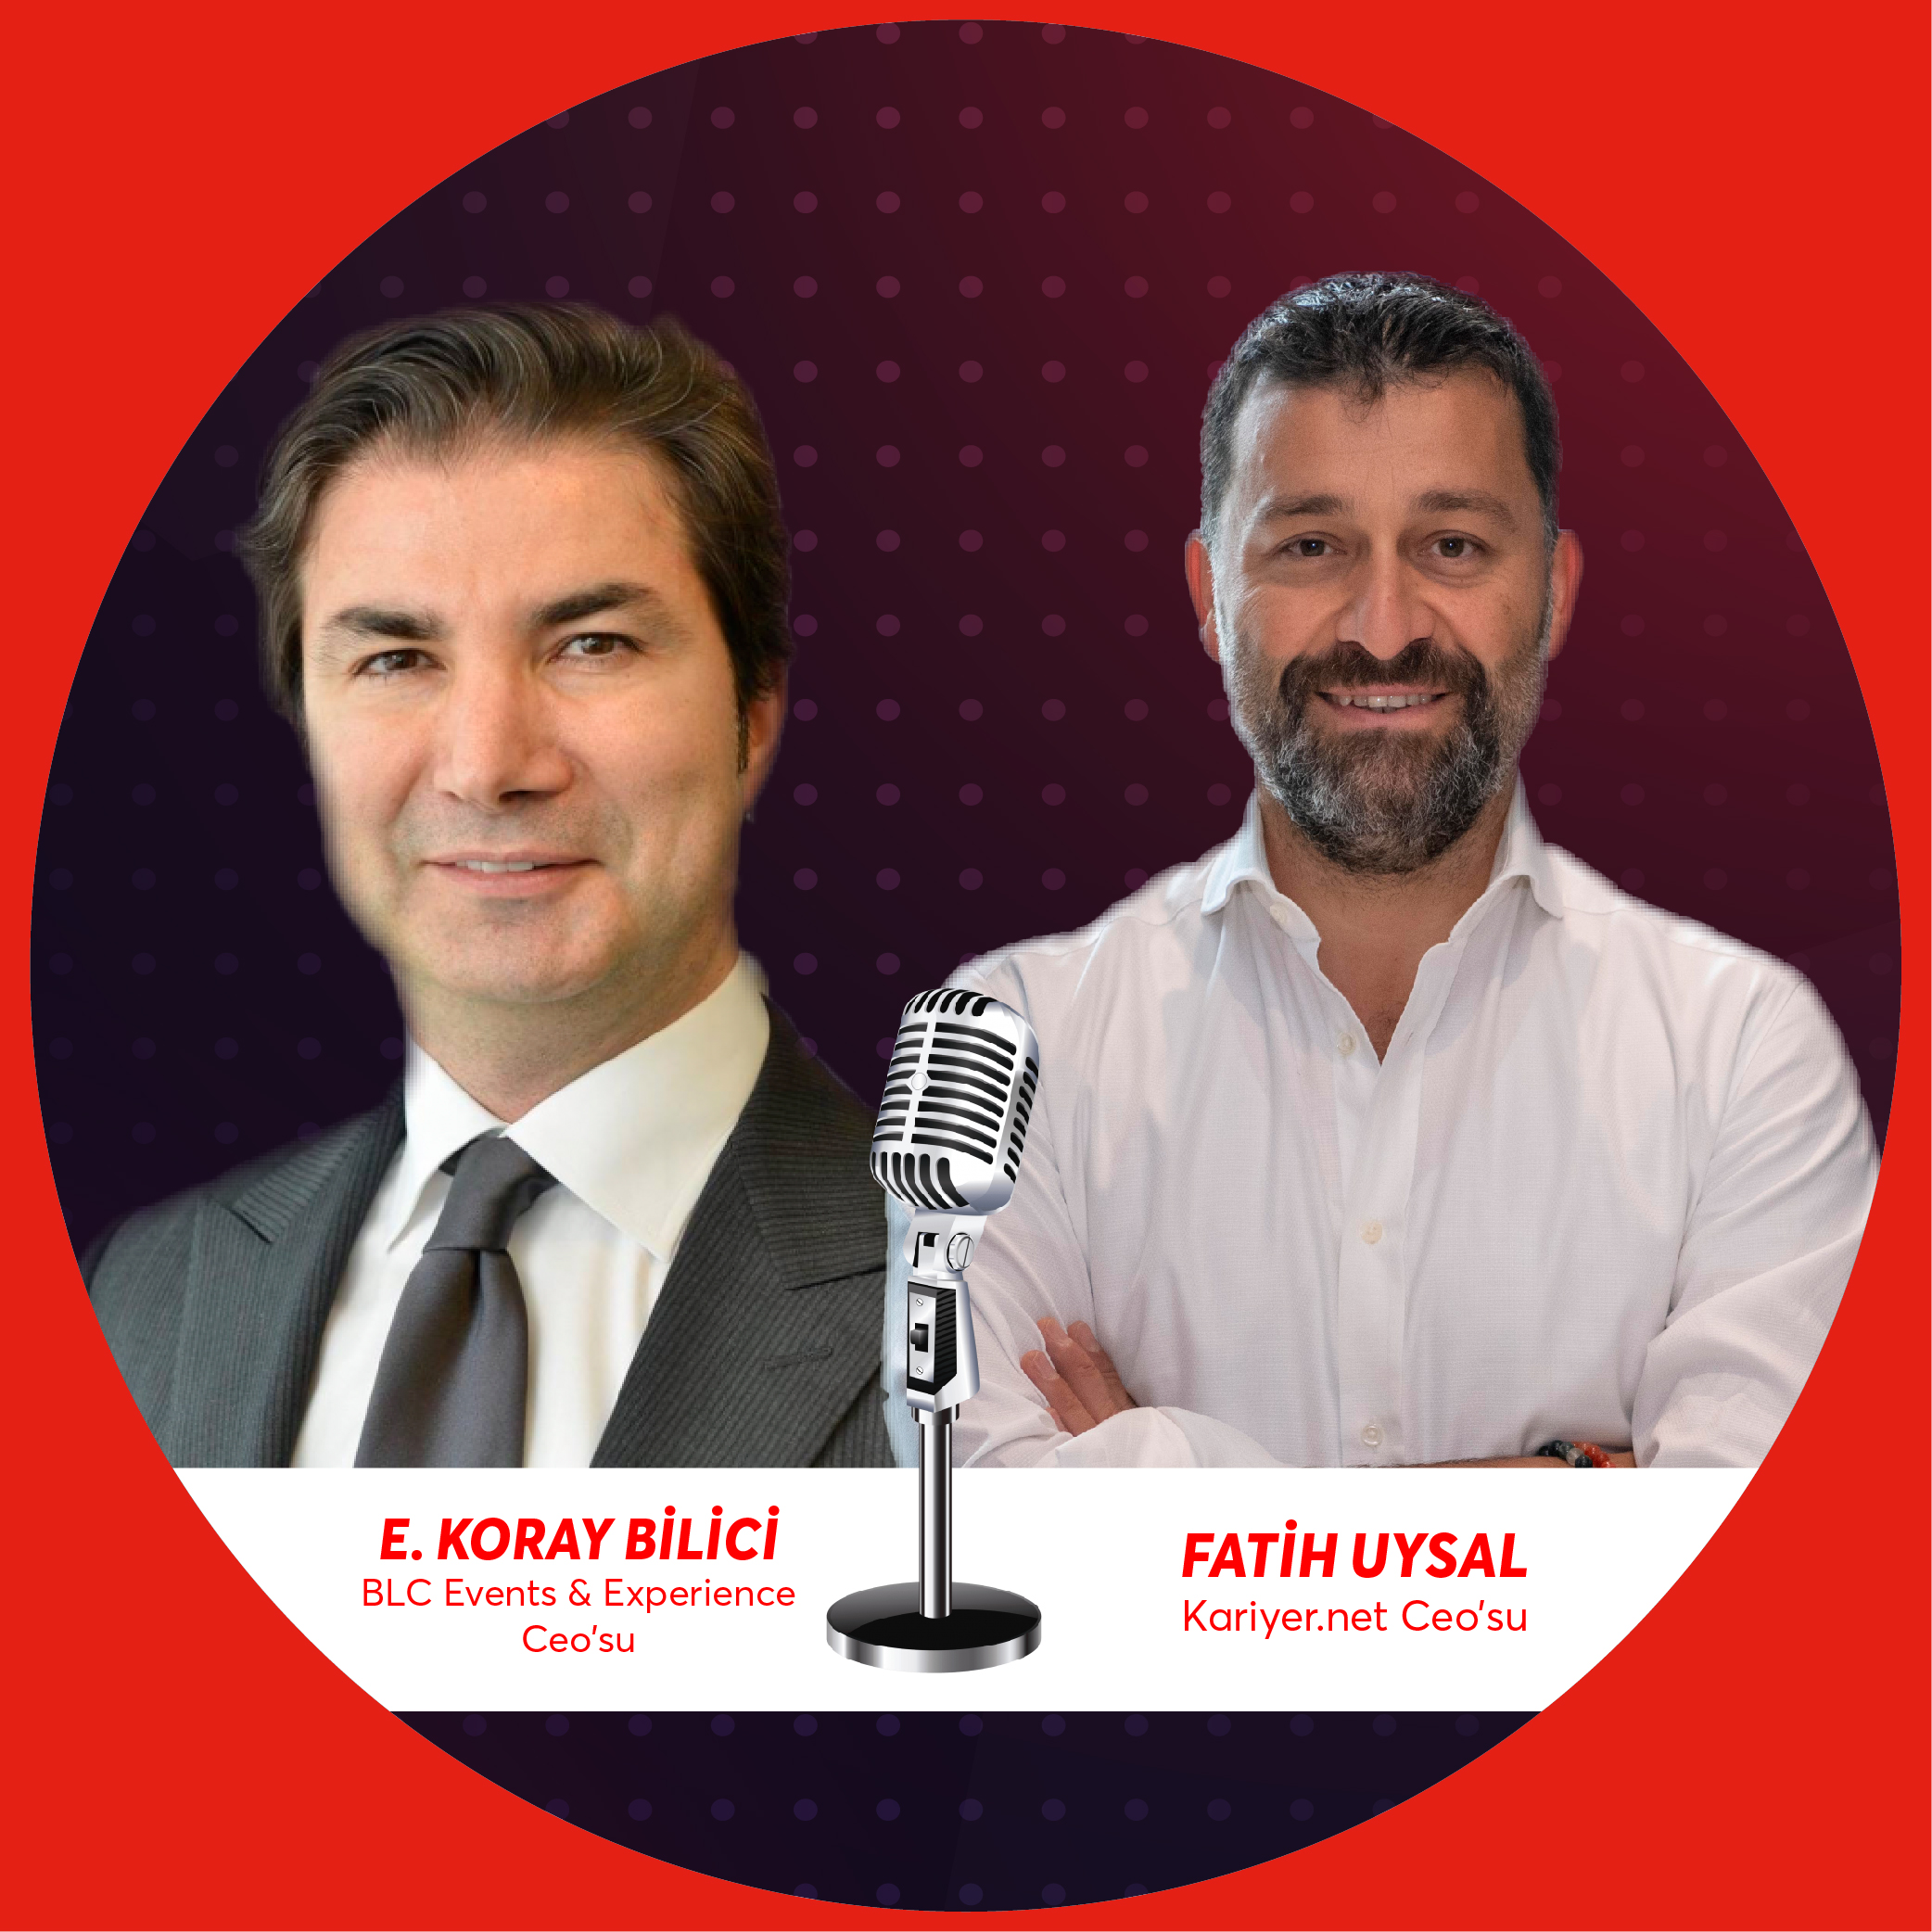 FATİH UYSAL | KARİYER NET CEO